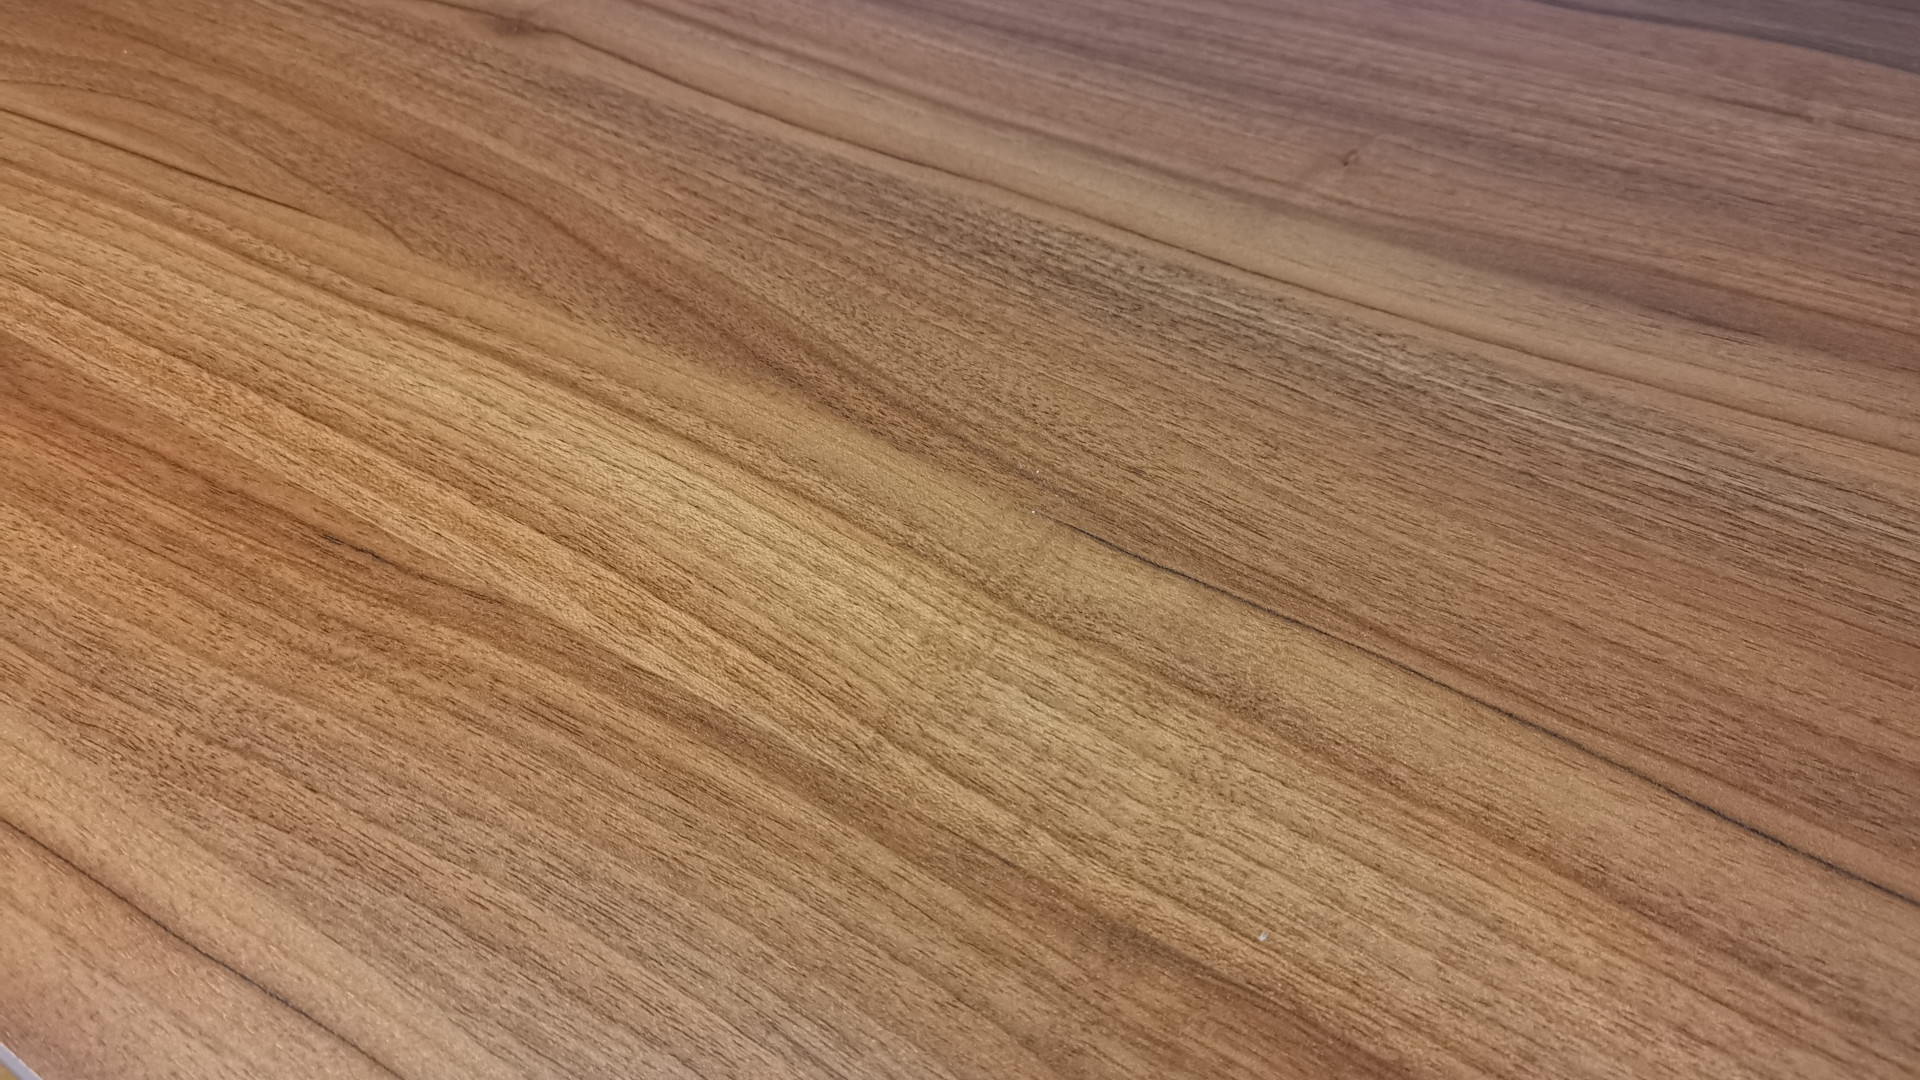 The fake wood grain effect on the Friska Primo Designer standing desk